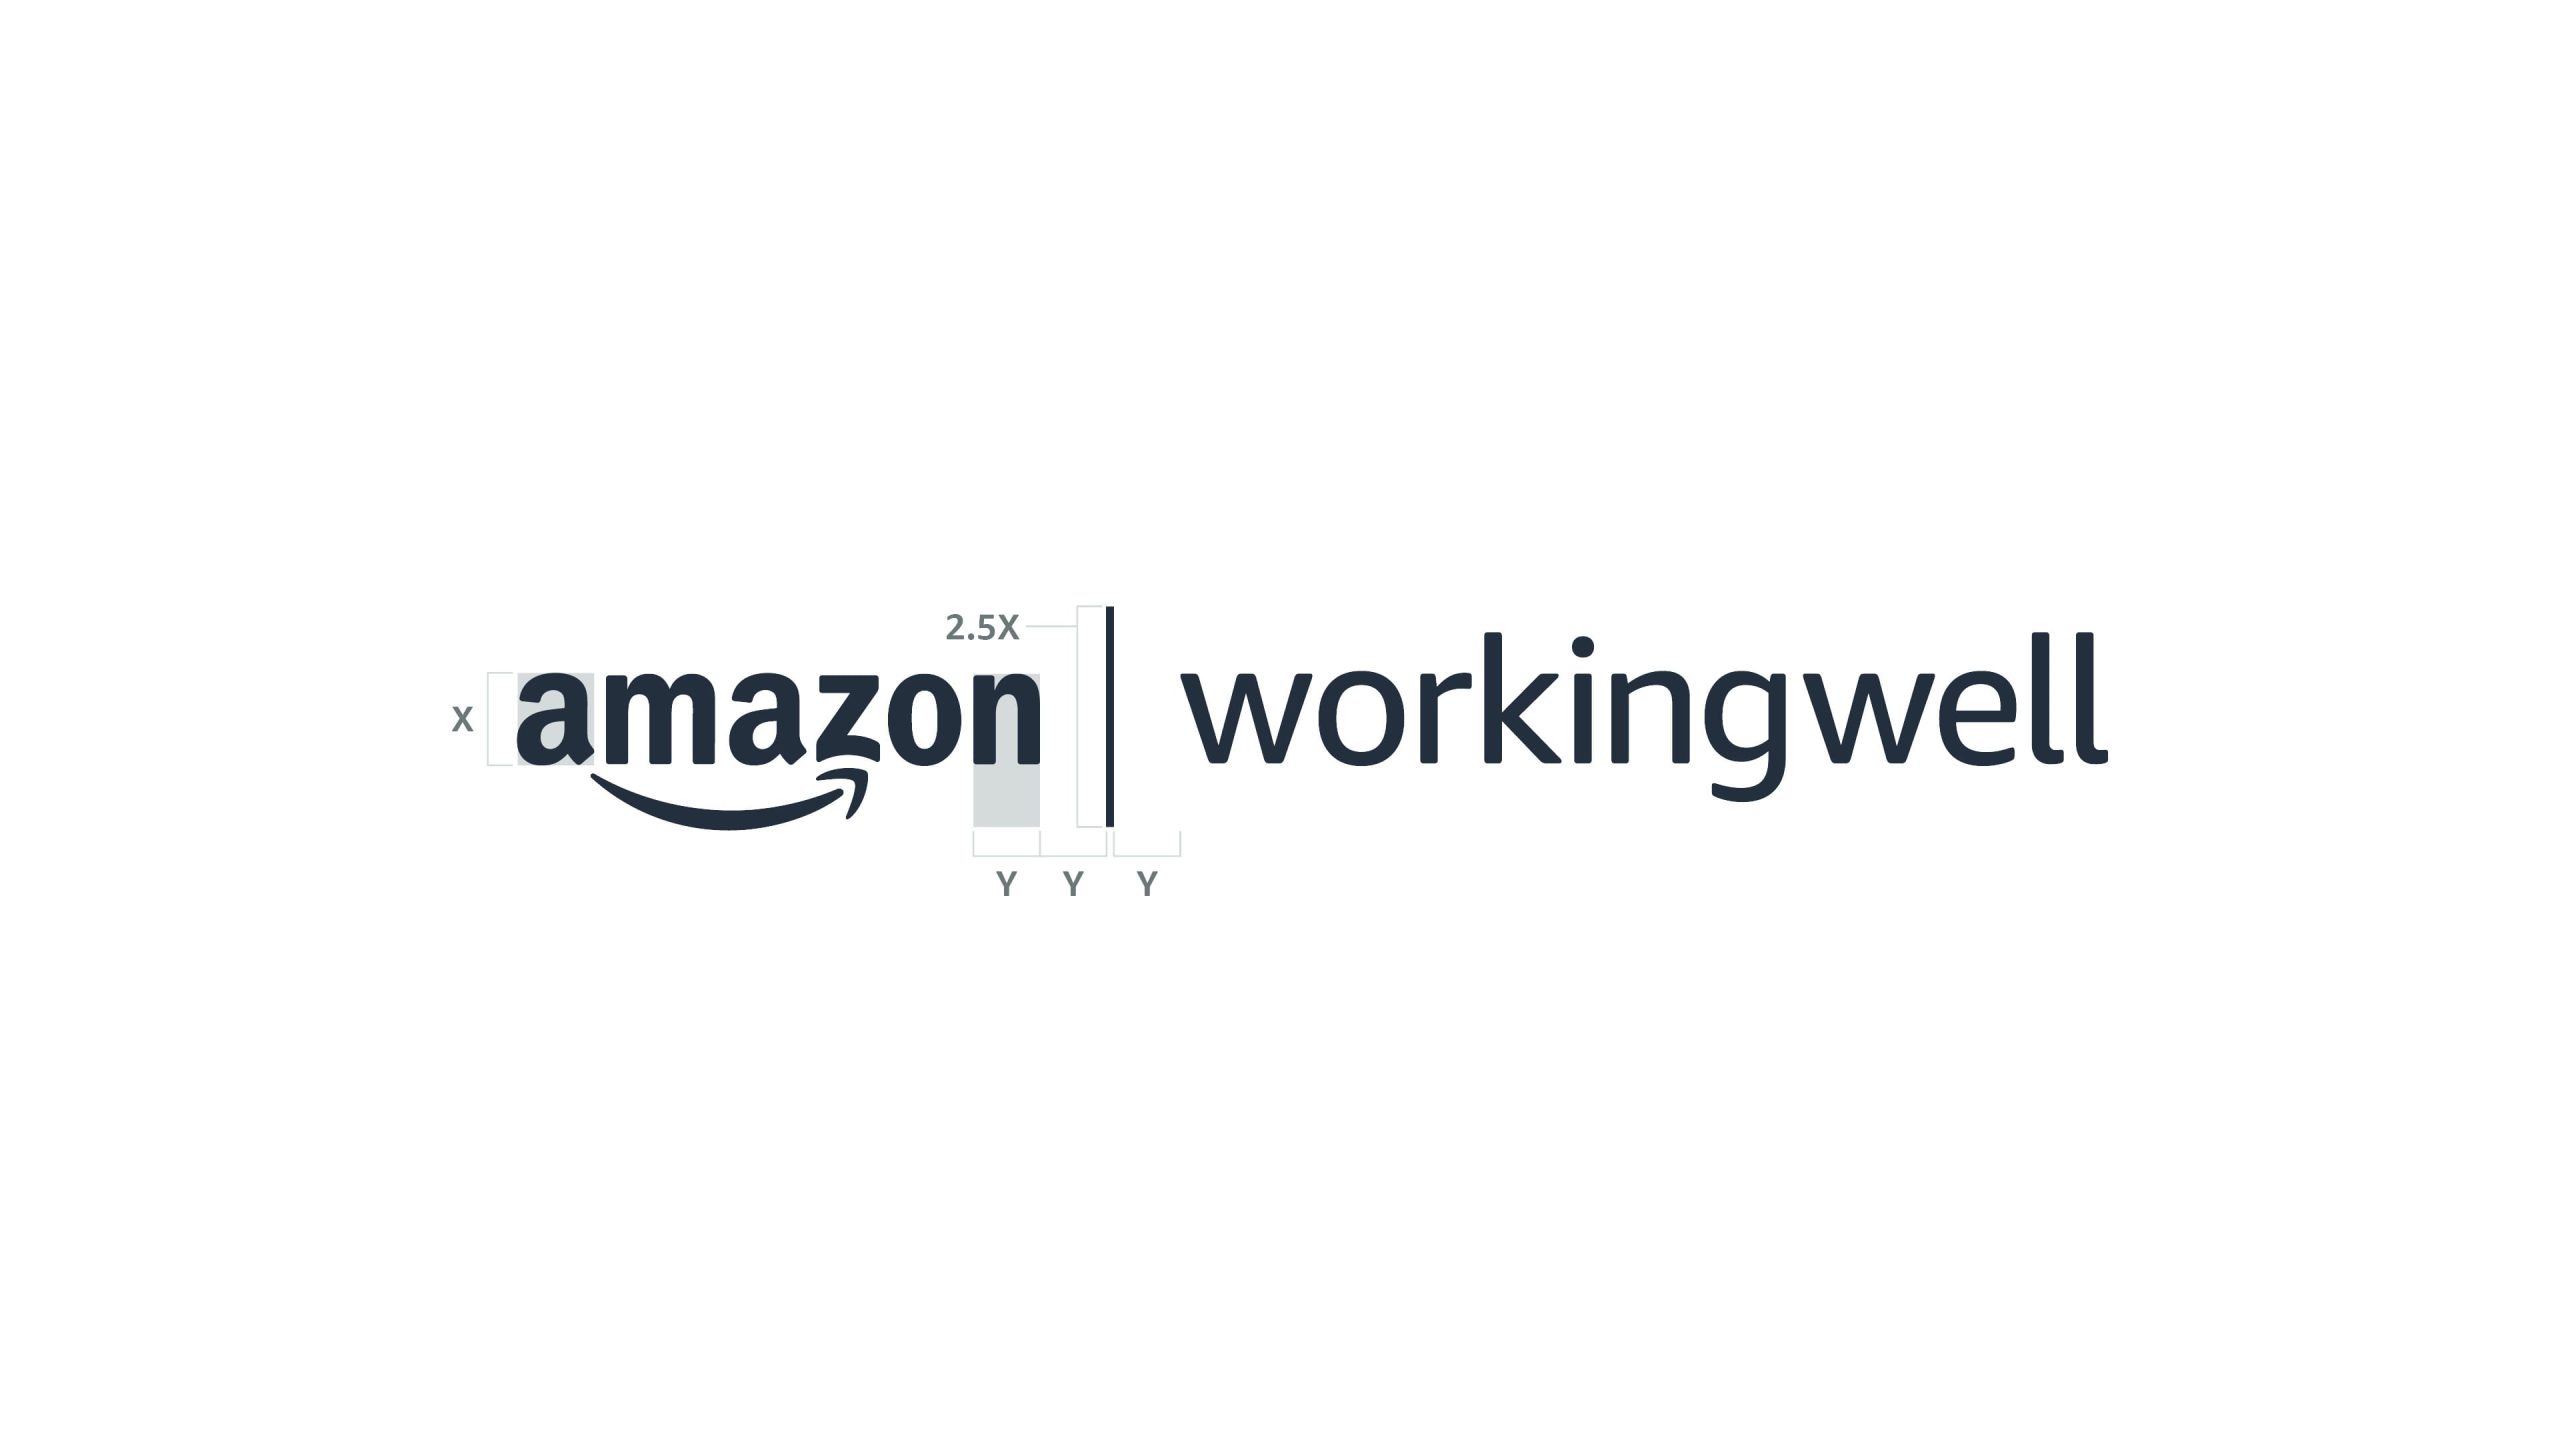 An image of an Amazon program logo